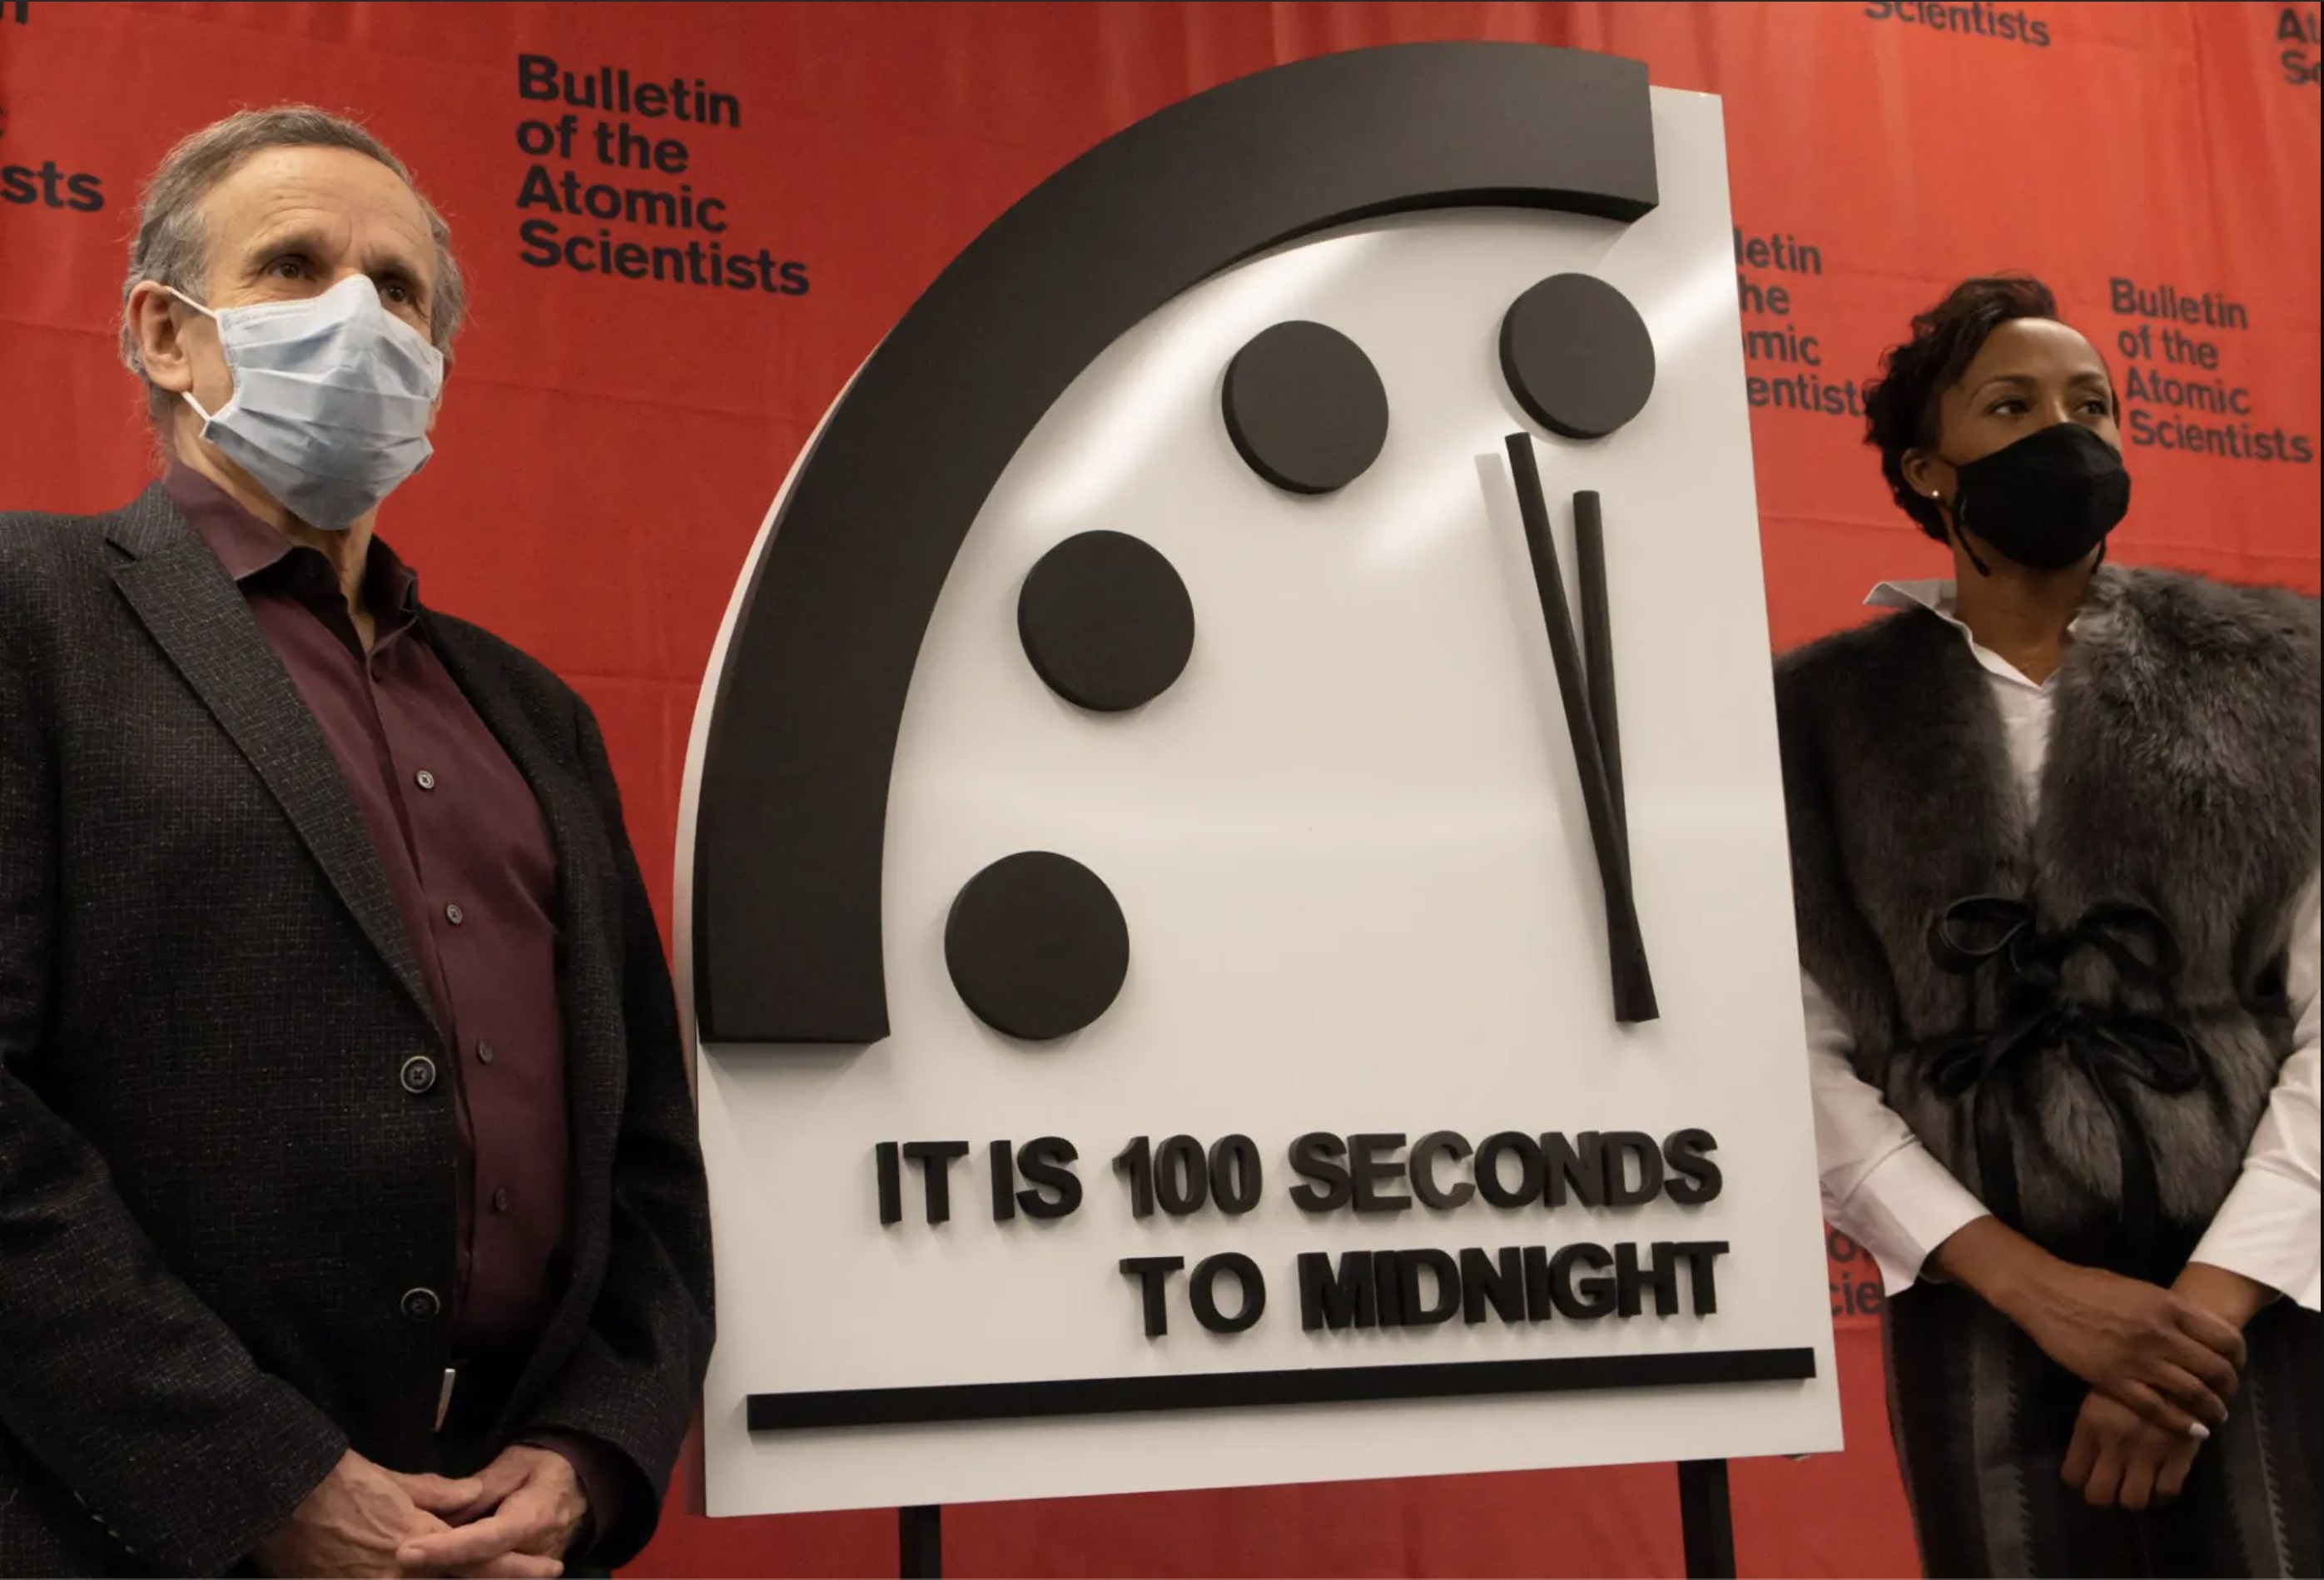 Сколько часов судного дня. СТО секунд до полуночи: часы Судного дня. Часы Судного дня 100 секунд. Часы Судного дня 2021. Часы Судного дня остановились.